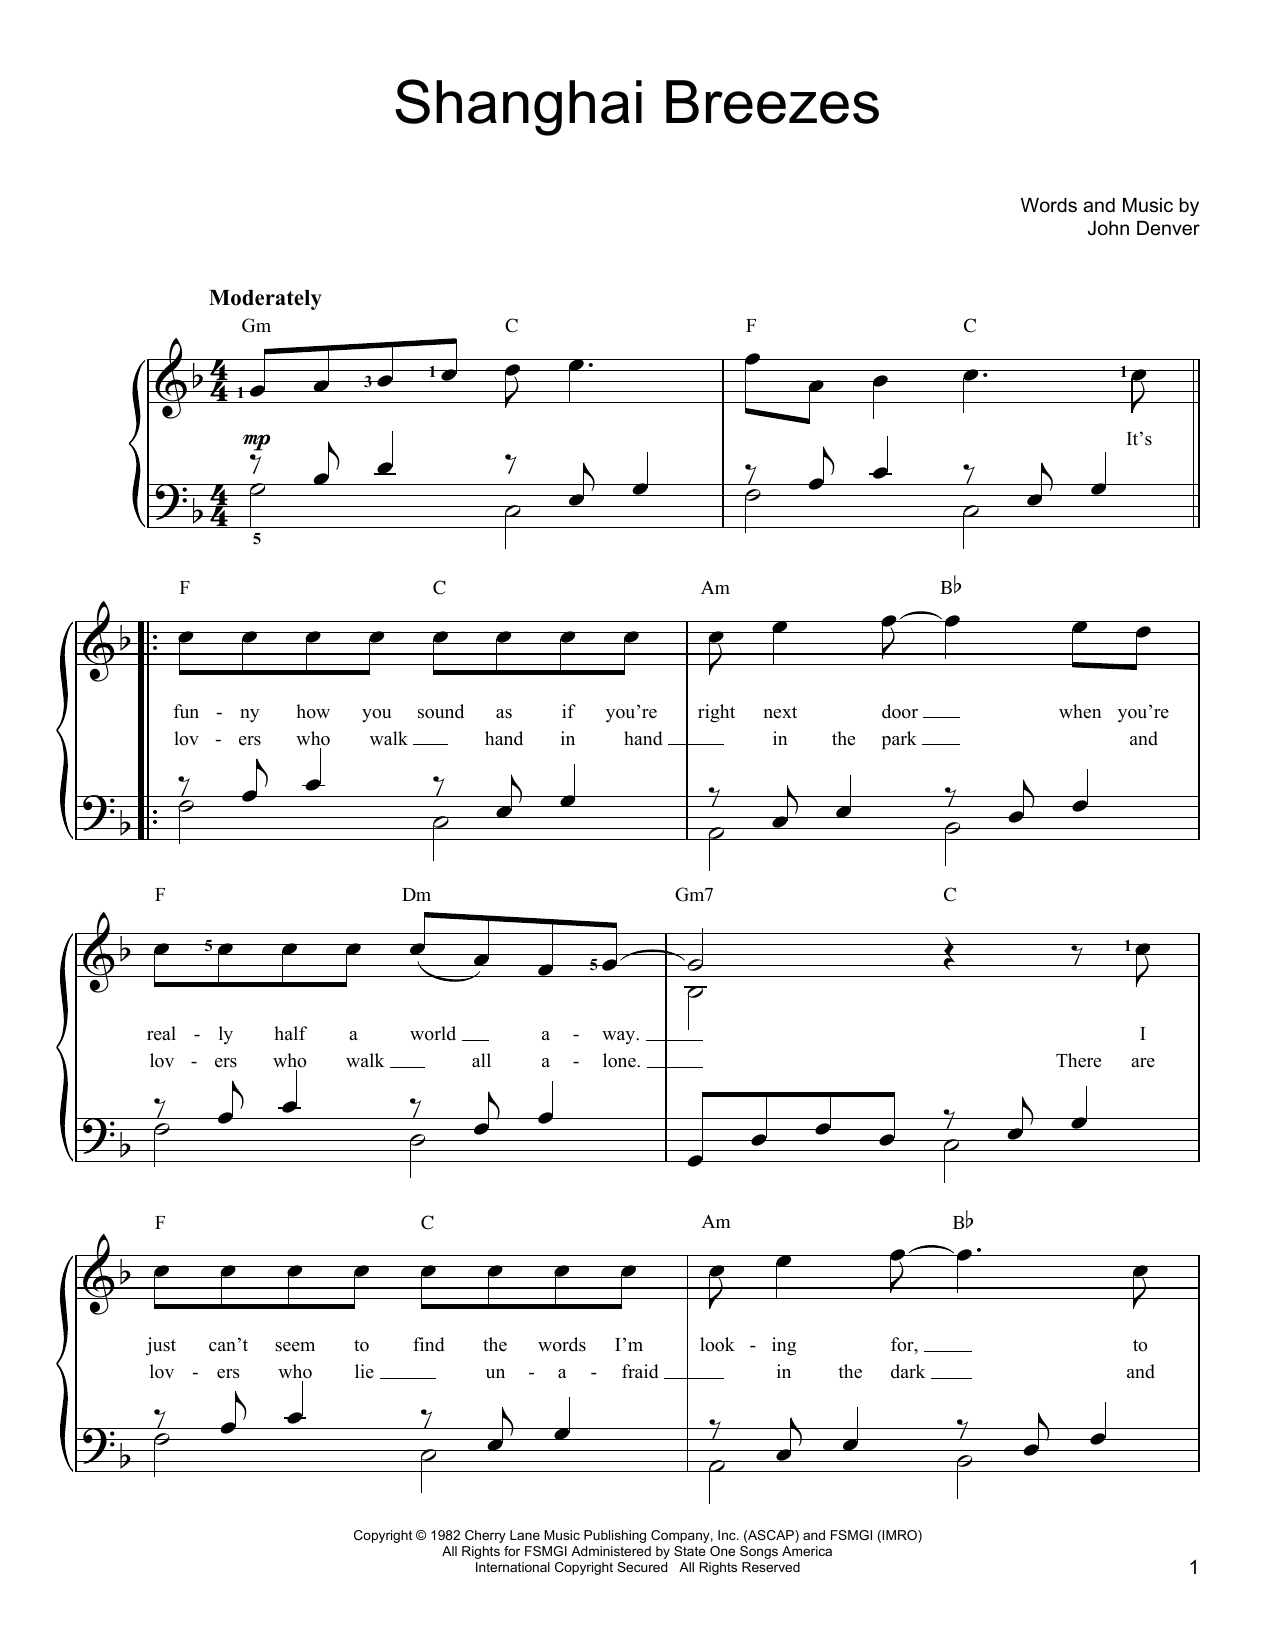 John Denver Shanghai Breezes Sheet Music Notes & Chords for Easy Piano - Download or Print PDF